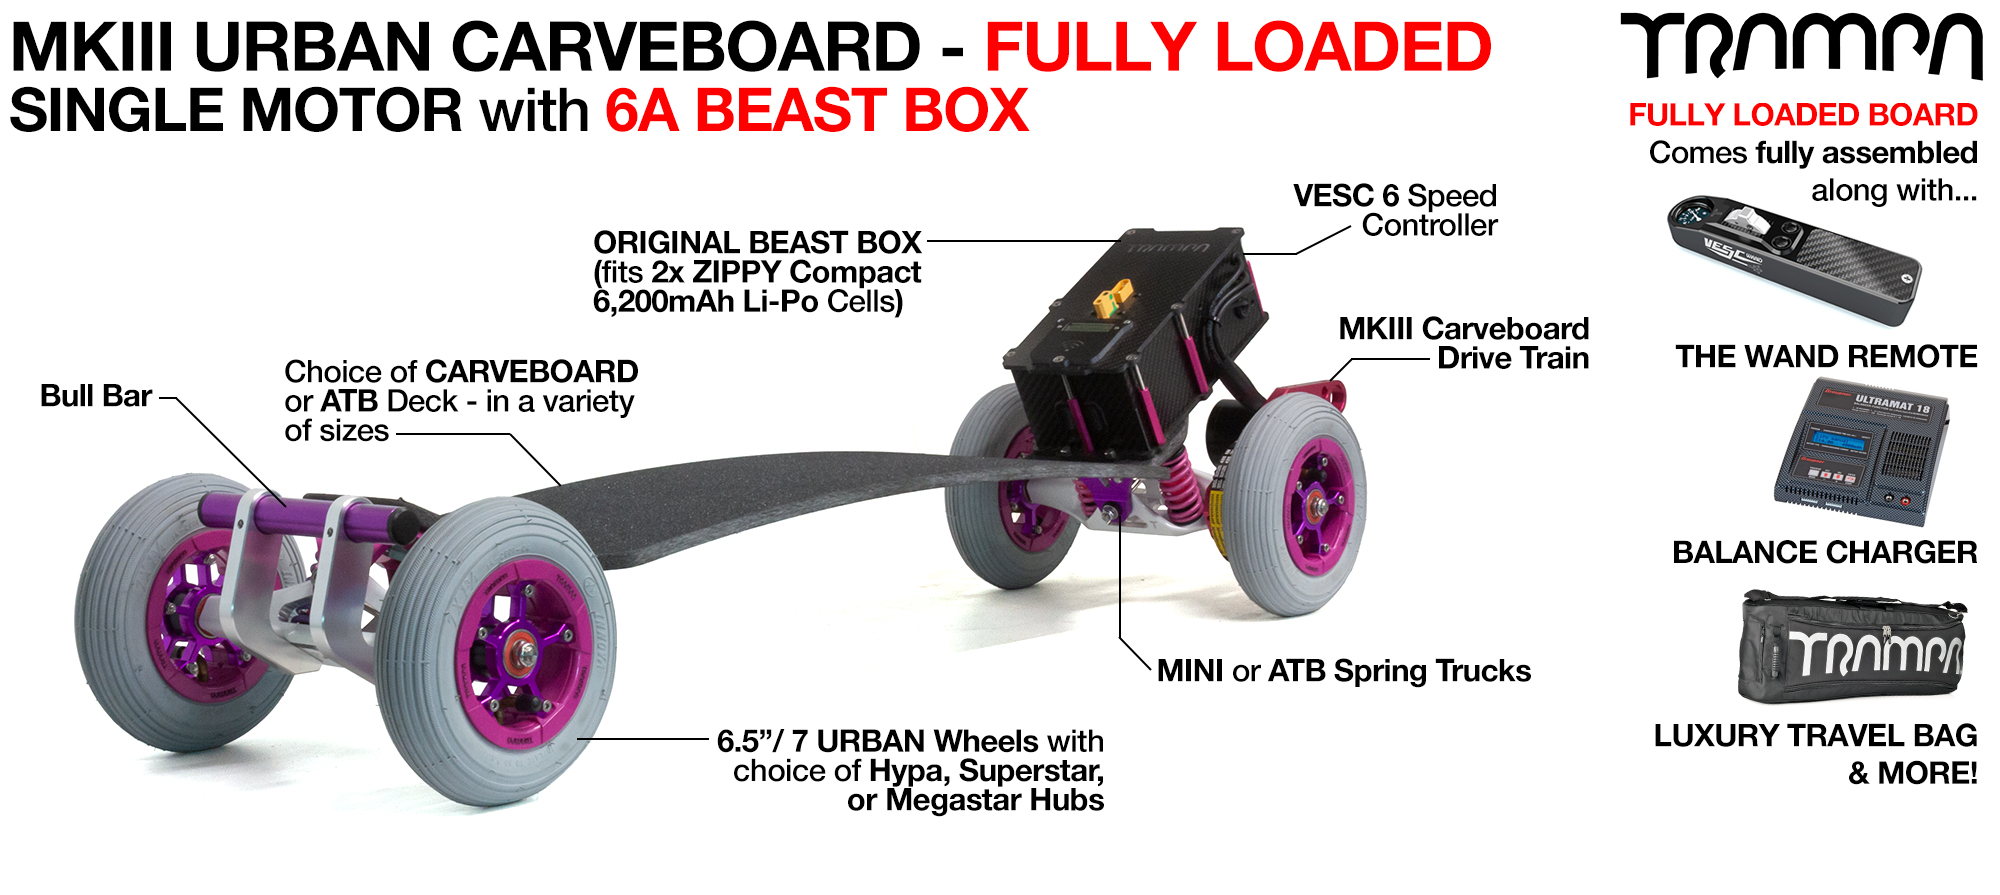 TRAMPA's MkIII Electric URBAN Carveboard - uses Mini Spring Trucks with MkIII Carve board Motor Mount's Custom TRAMPA hubs & 125mm URBAN longboard Tyres - SINGLE Motor 6.2A FULLY LOADED  